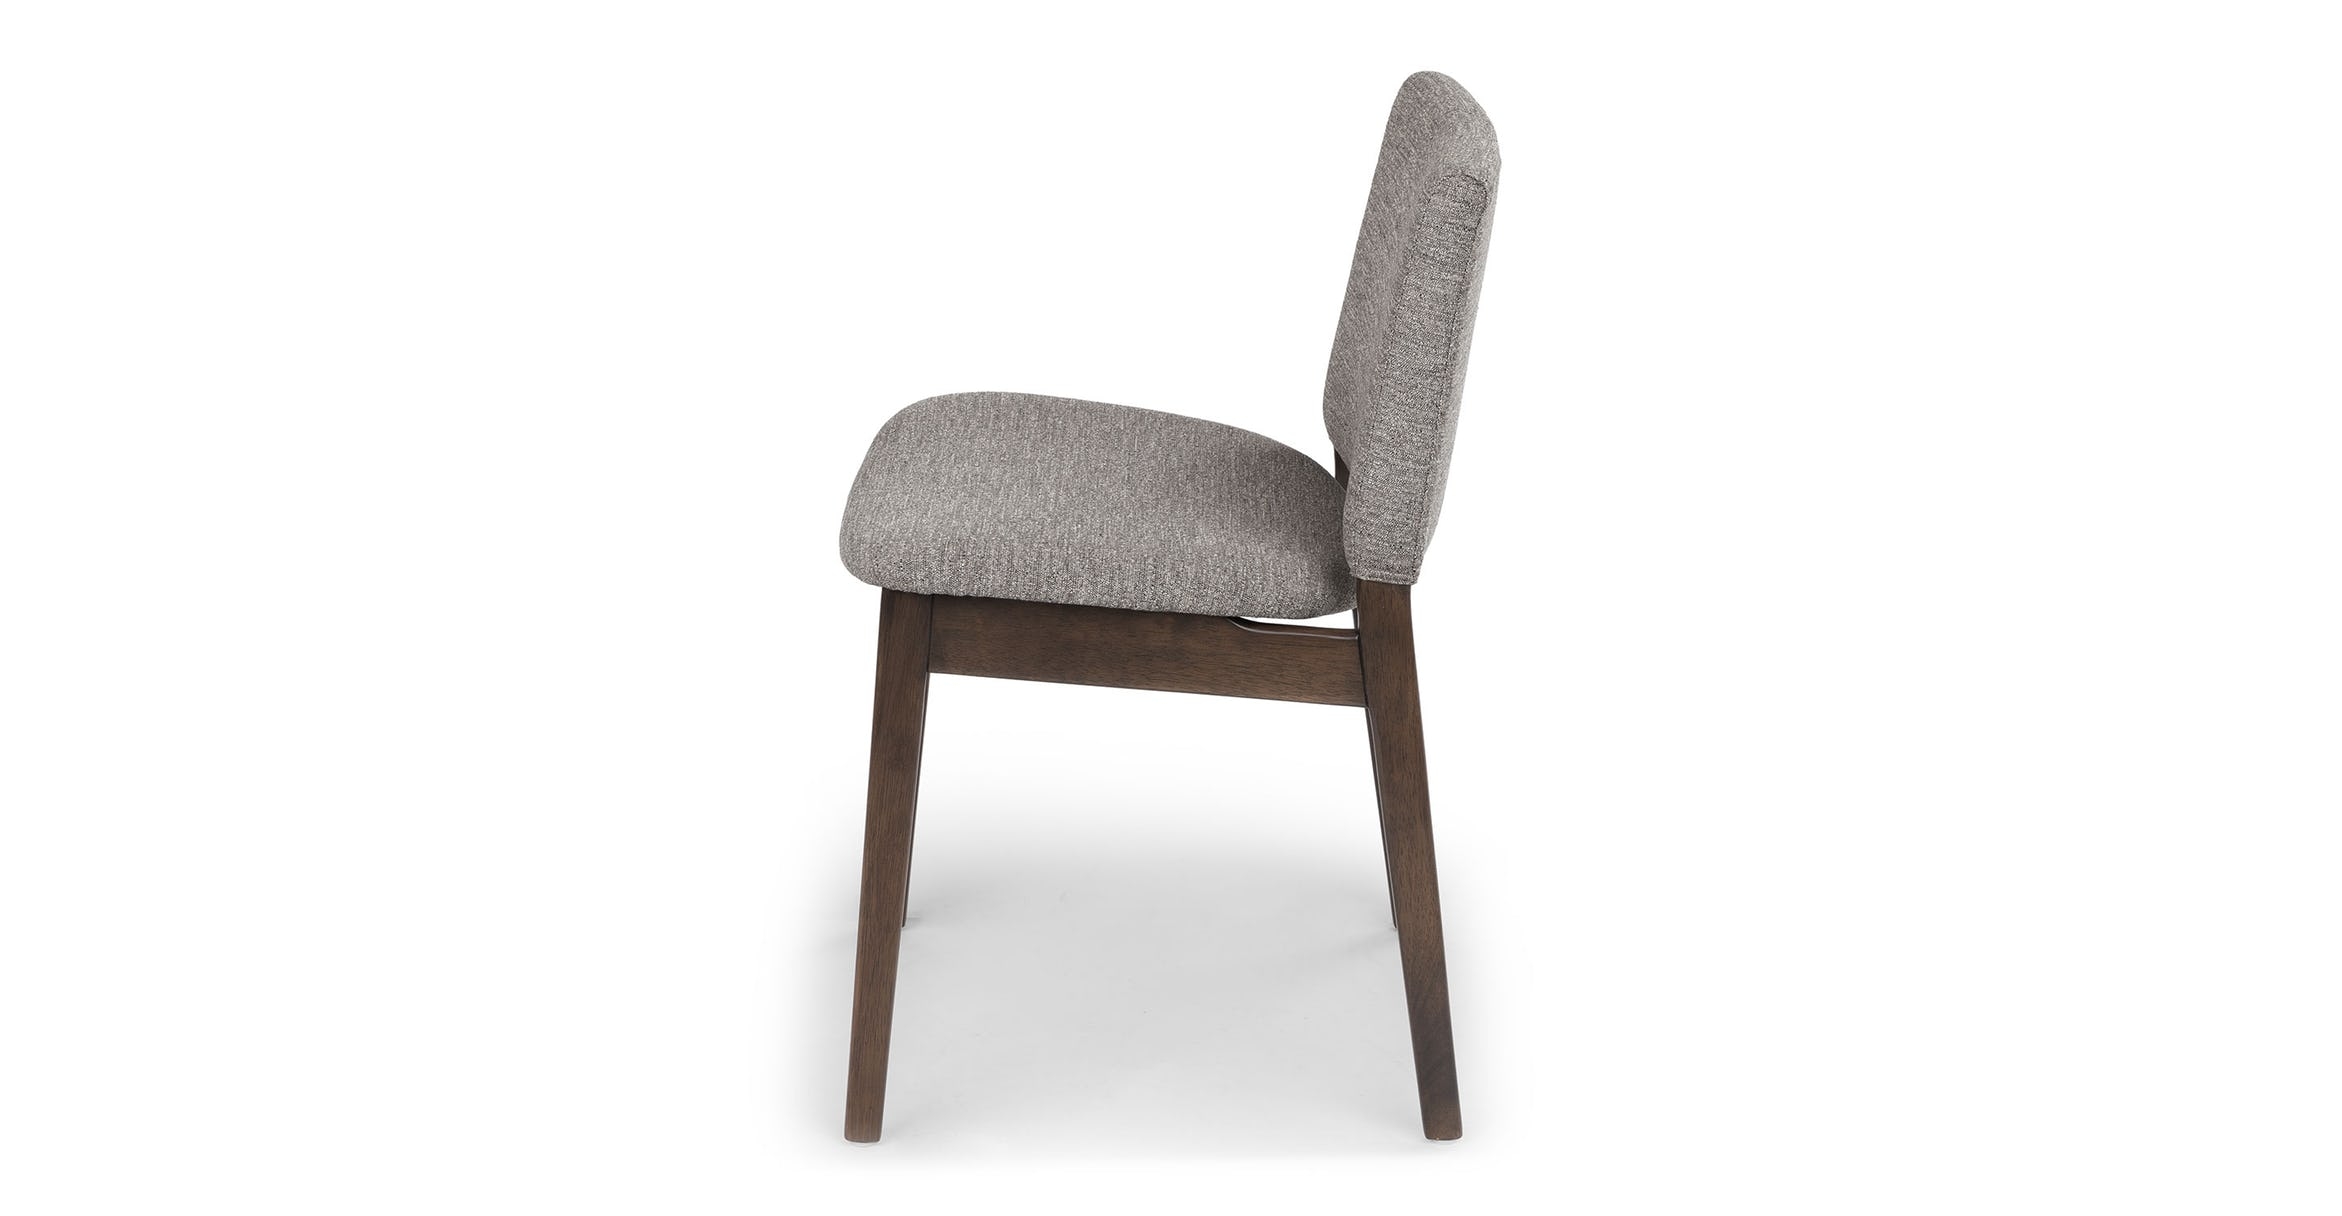 Nosh Quarry Gray Smoke Dining Chair - Image 2